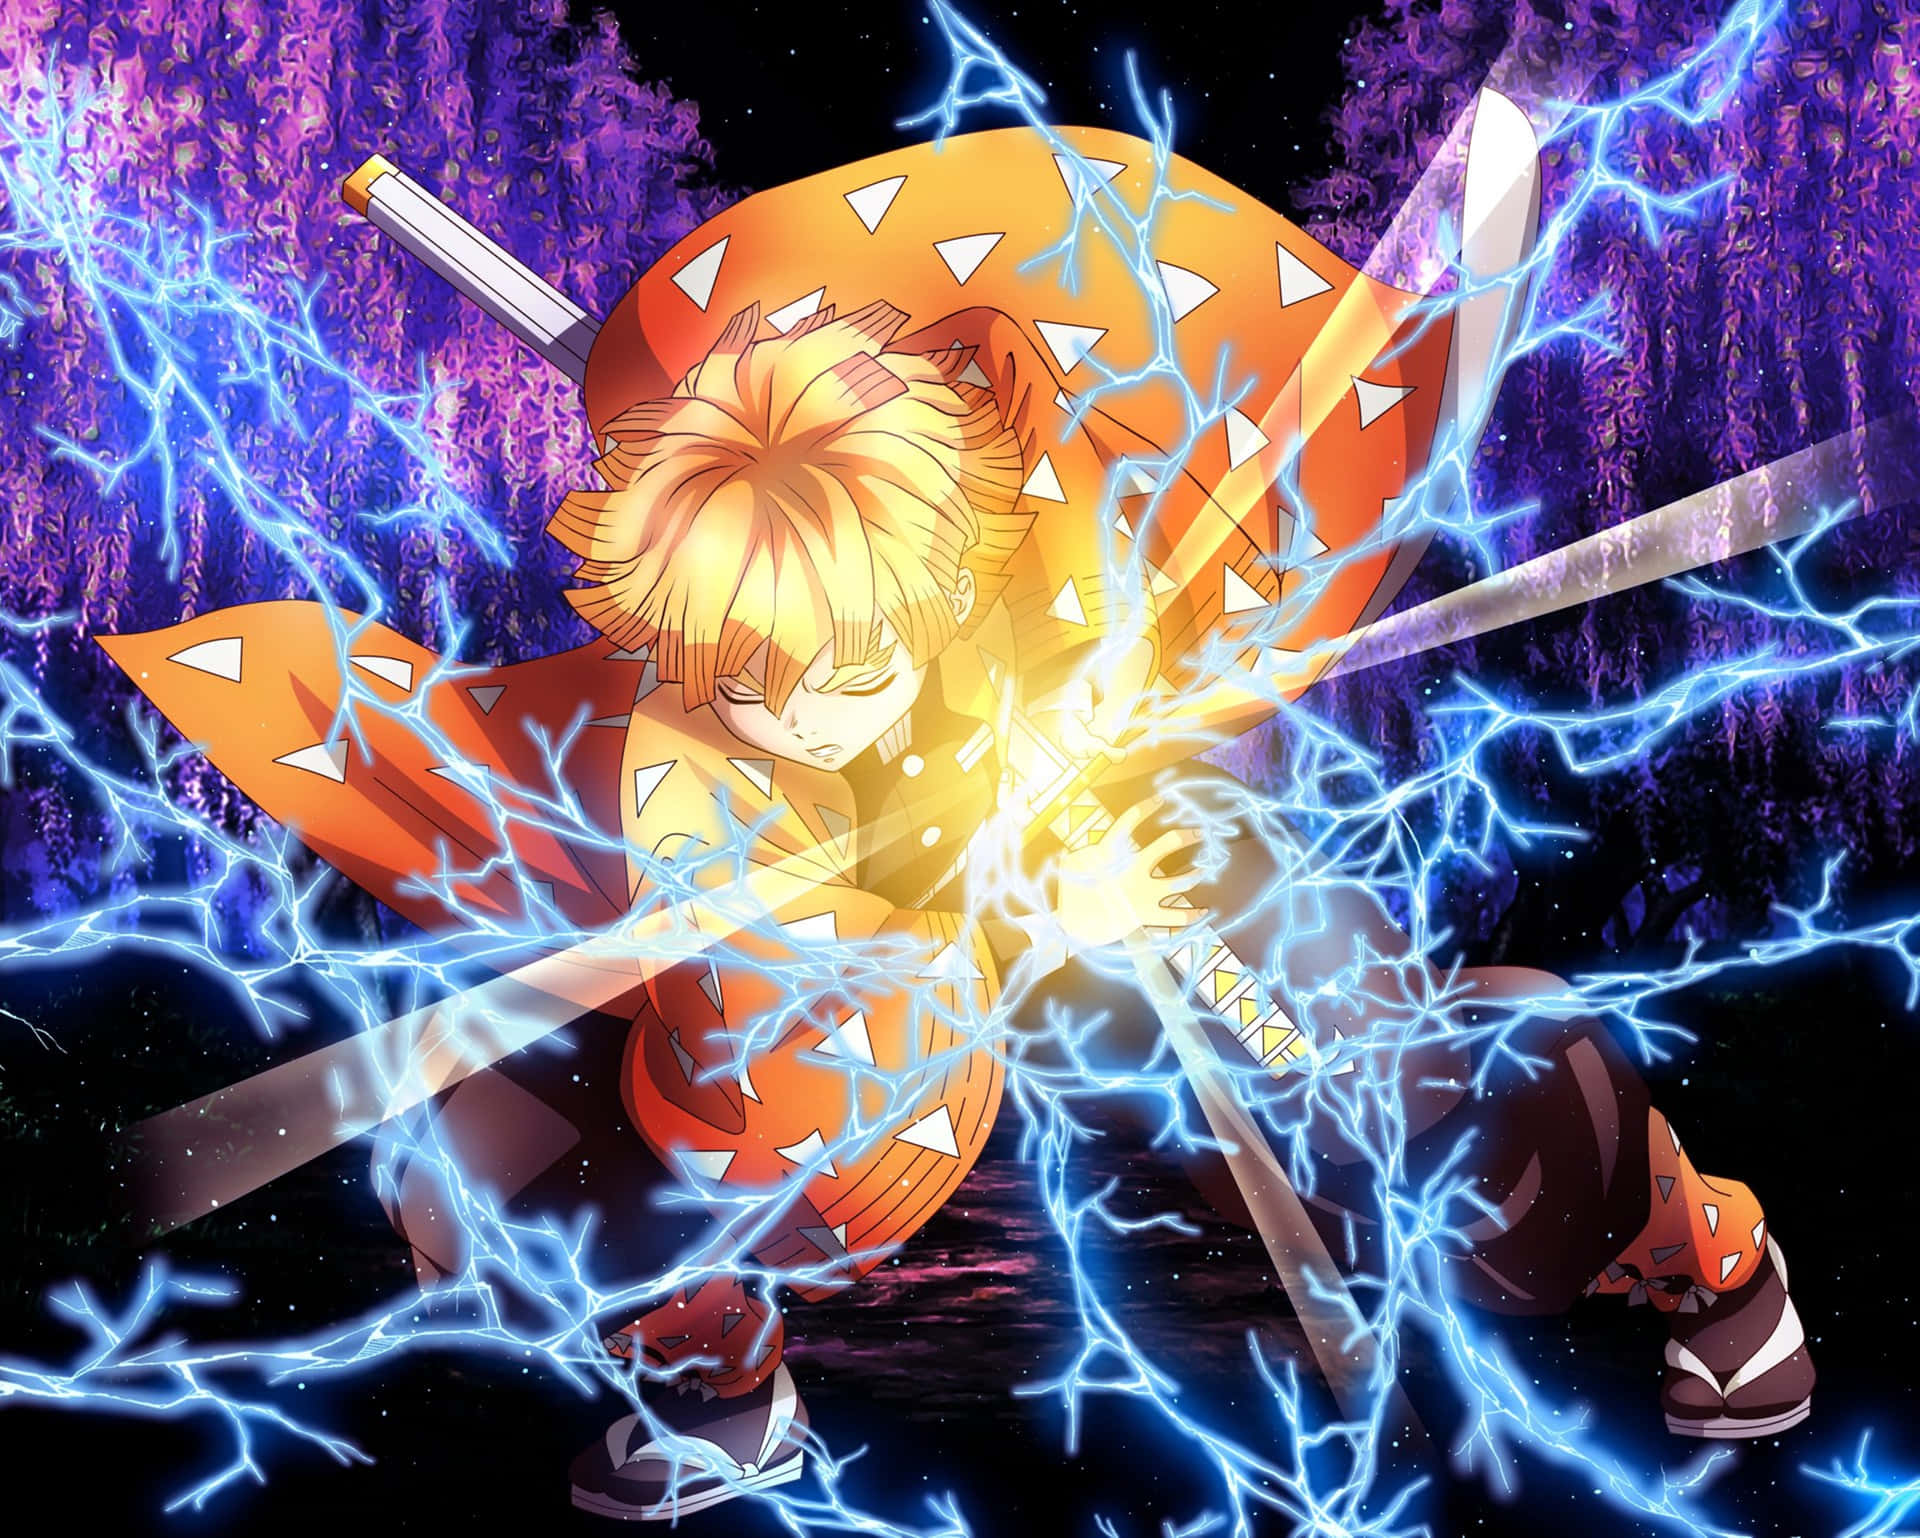 Zenitsu Agatsuma wielding his Nichirin blade in Demon Slayer Wallpaper